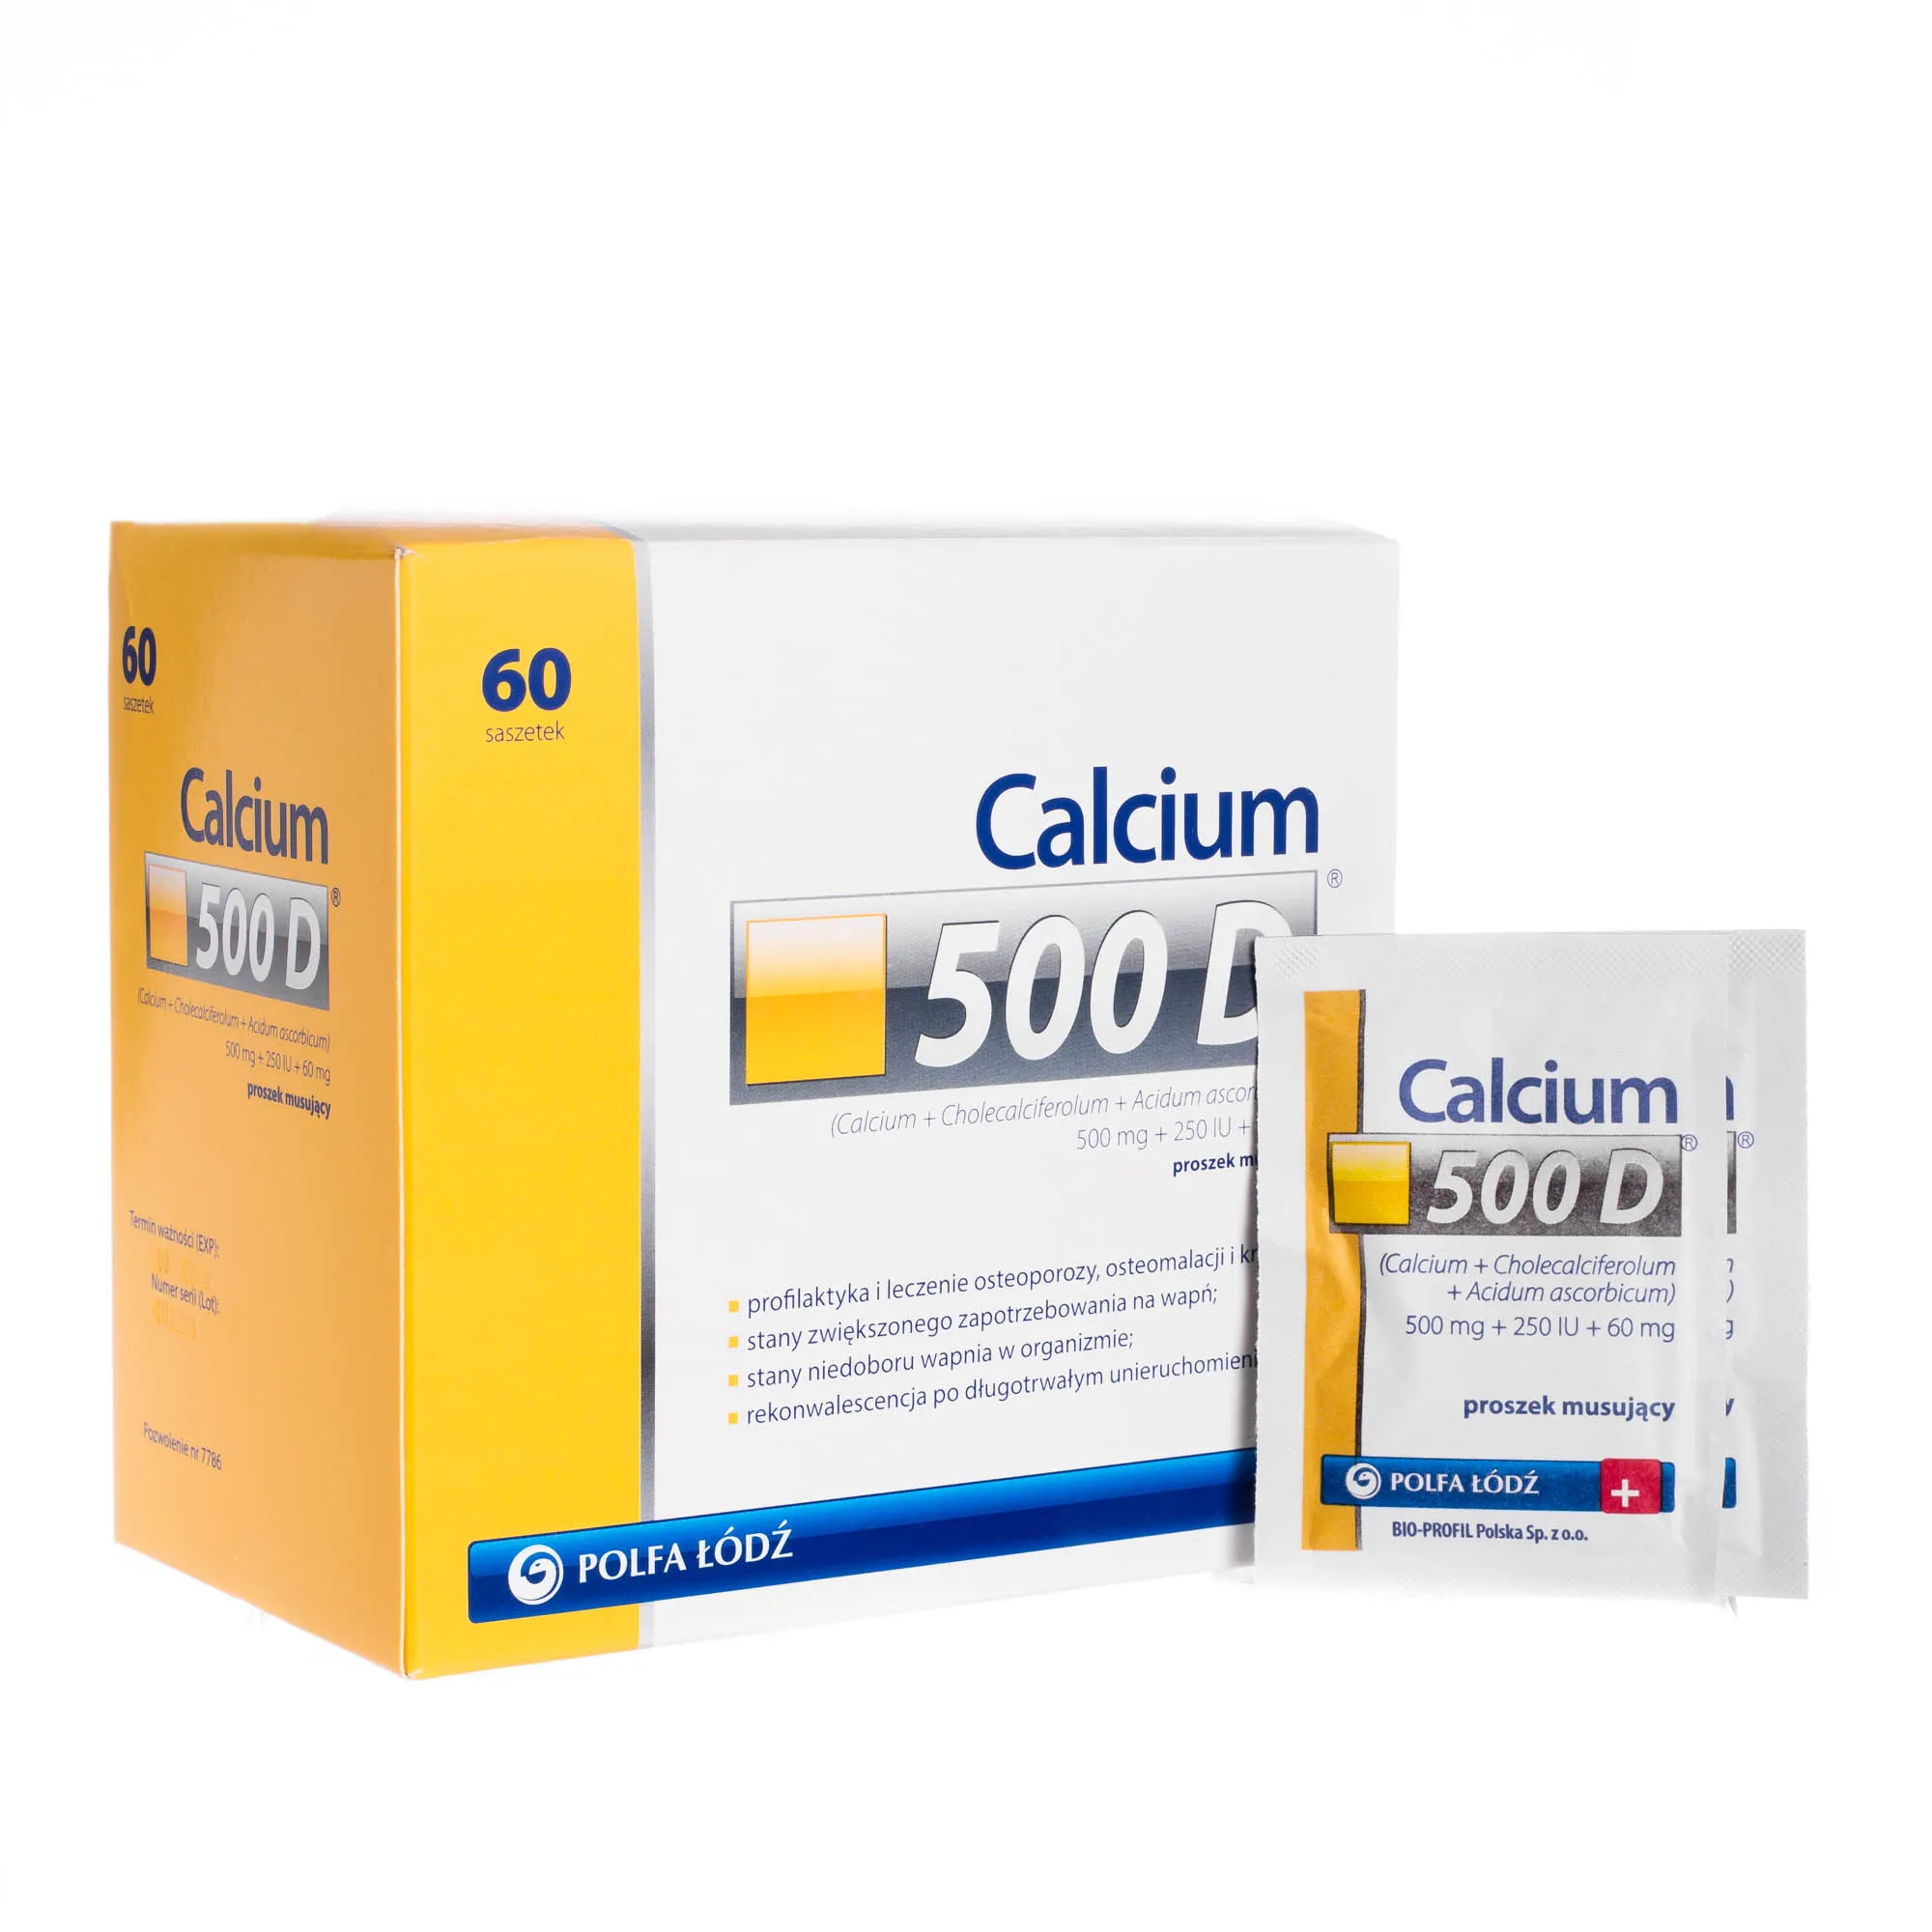 Calcium 500 D ( Calcium 500 mg + Cholecalciferolum 250 IU + Acidum ascorbicum 60 mg ) proszek musujący, 60 saszetek